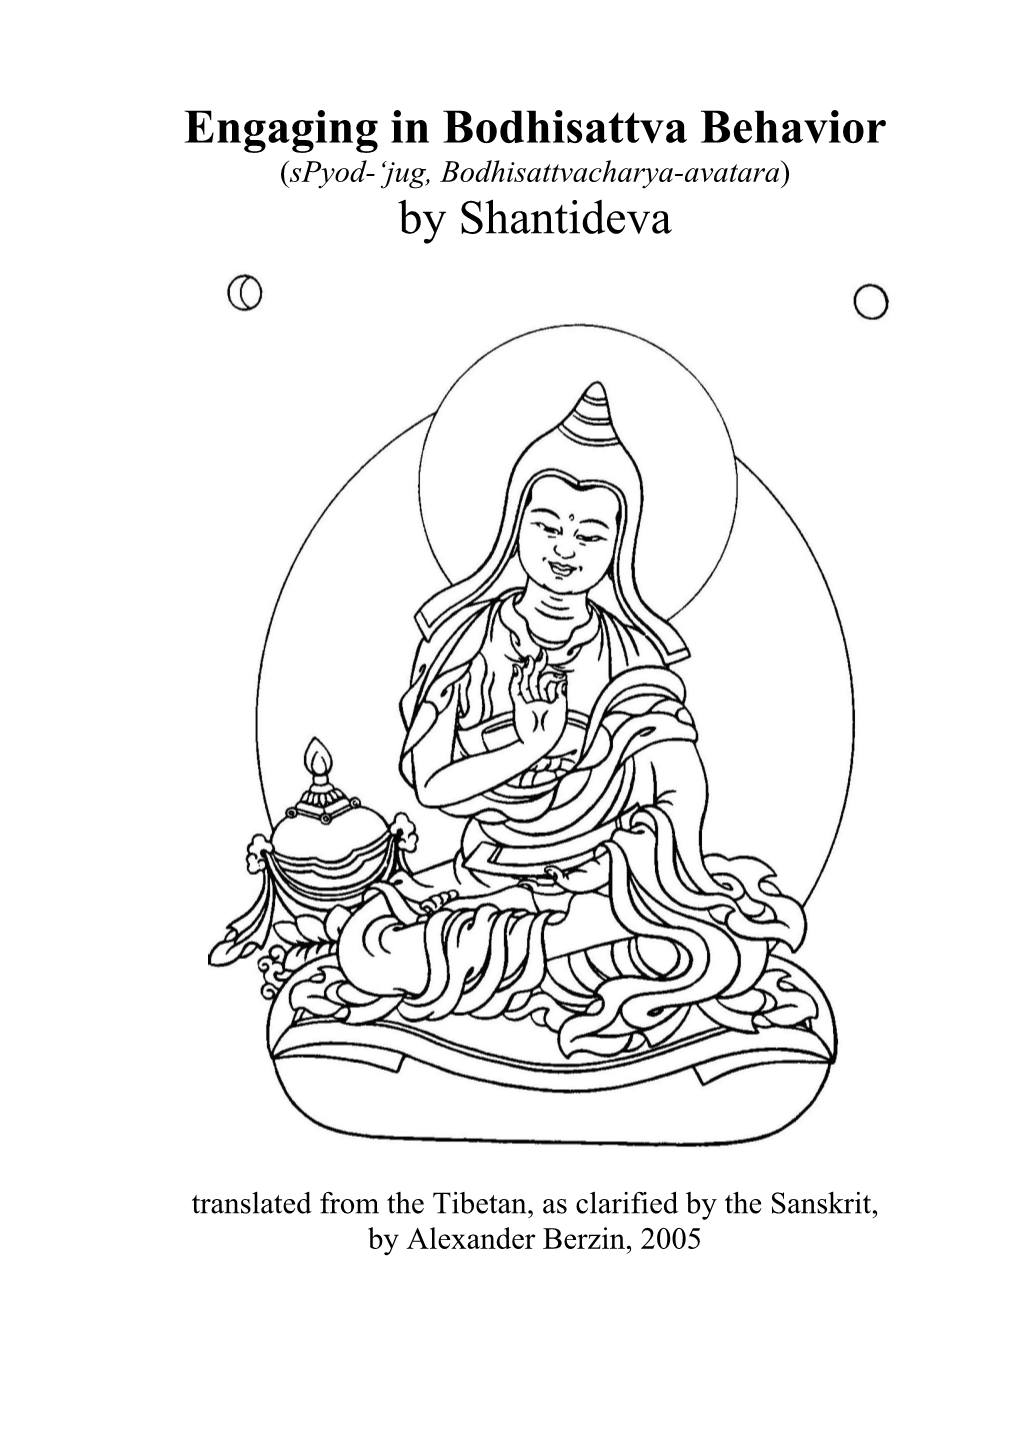 Engaging in Bodhisattva Behavior by Shantideva